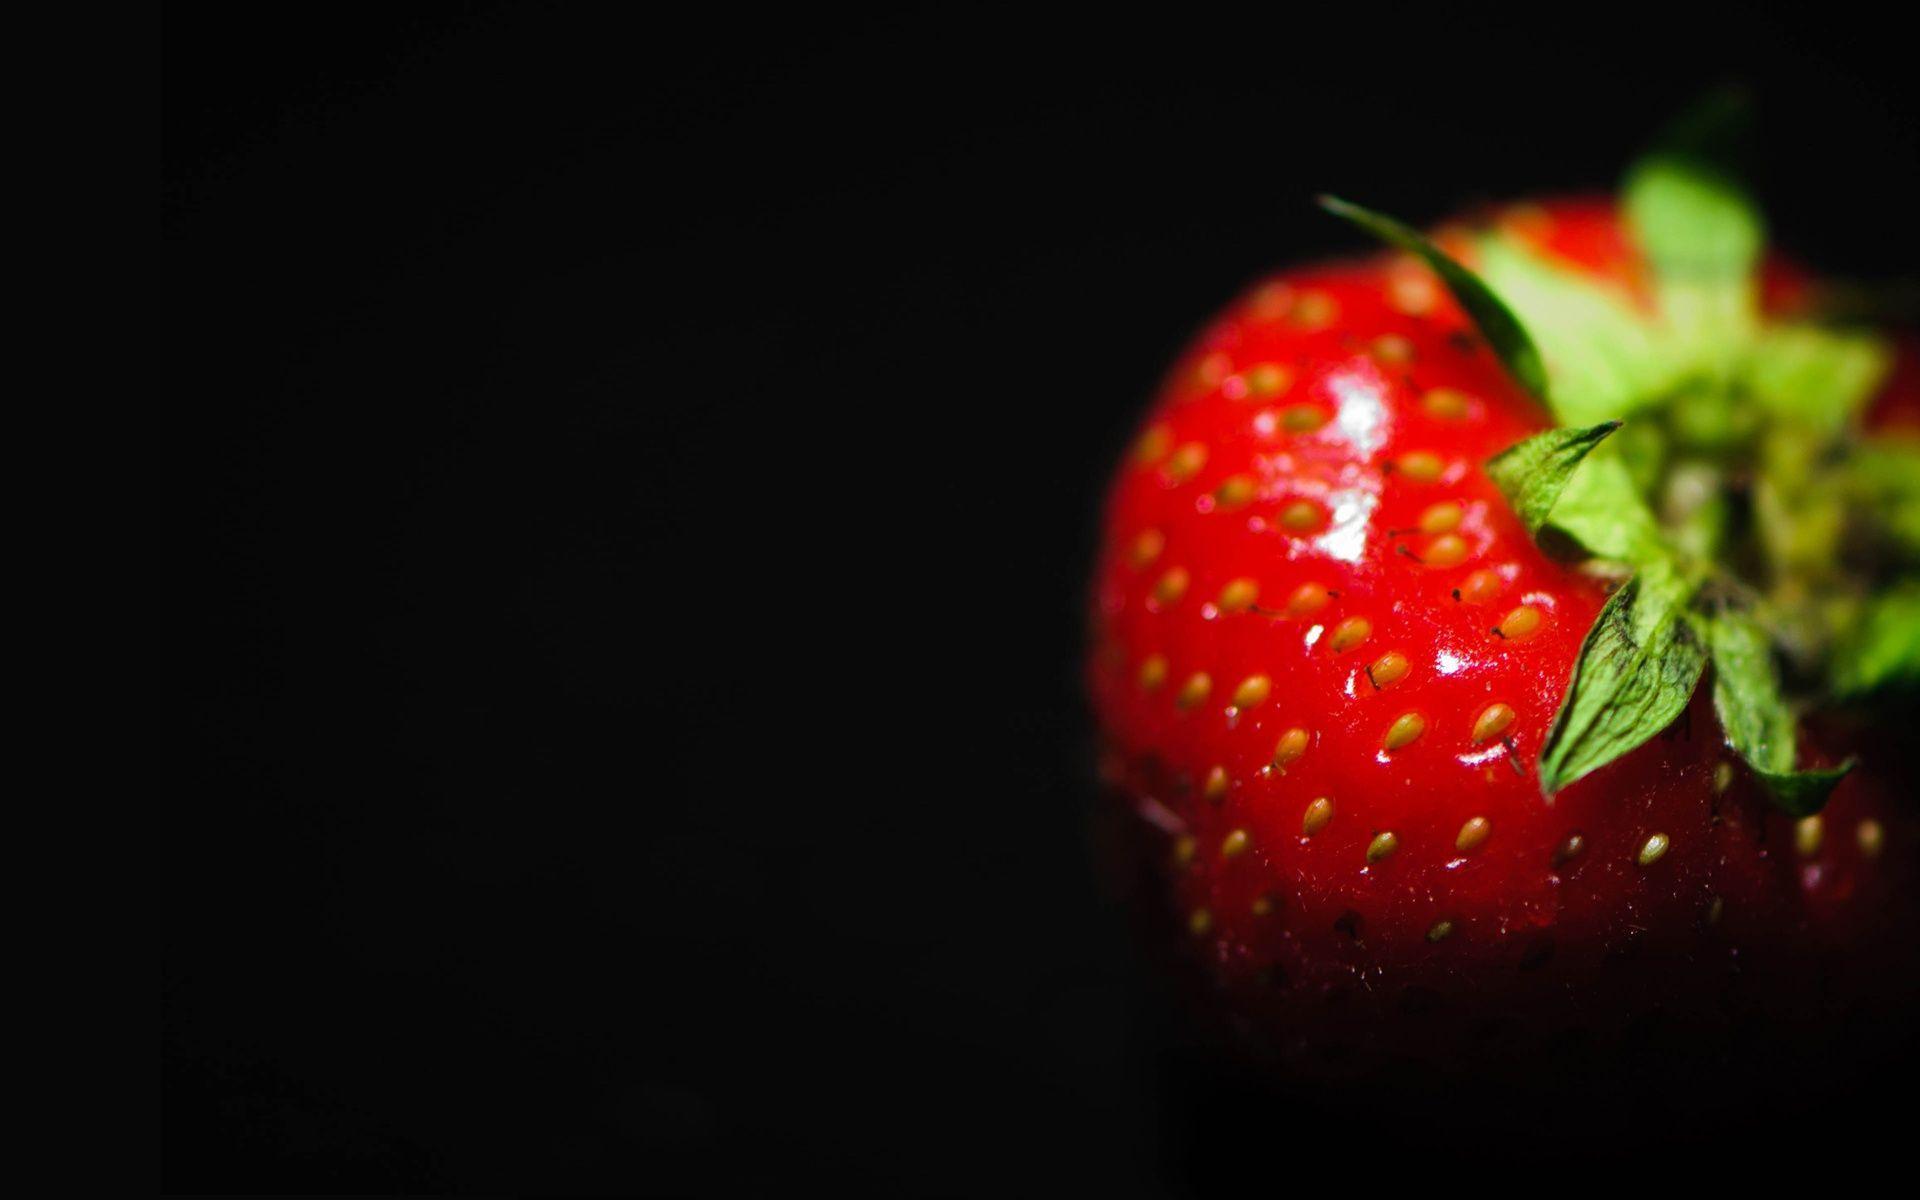 Strawberry Wallpaper, Fantastic Strawberry Image 4K Ultra